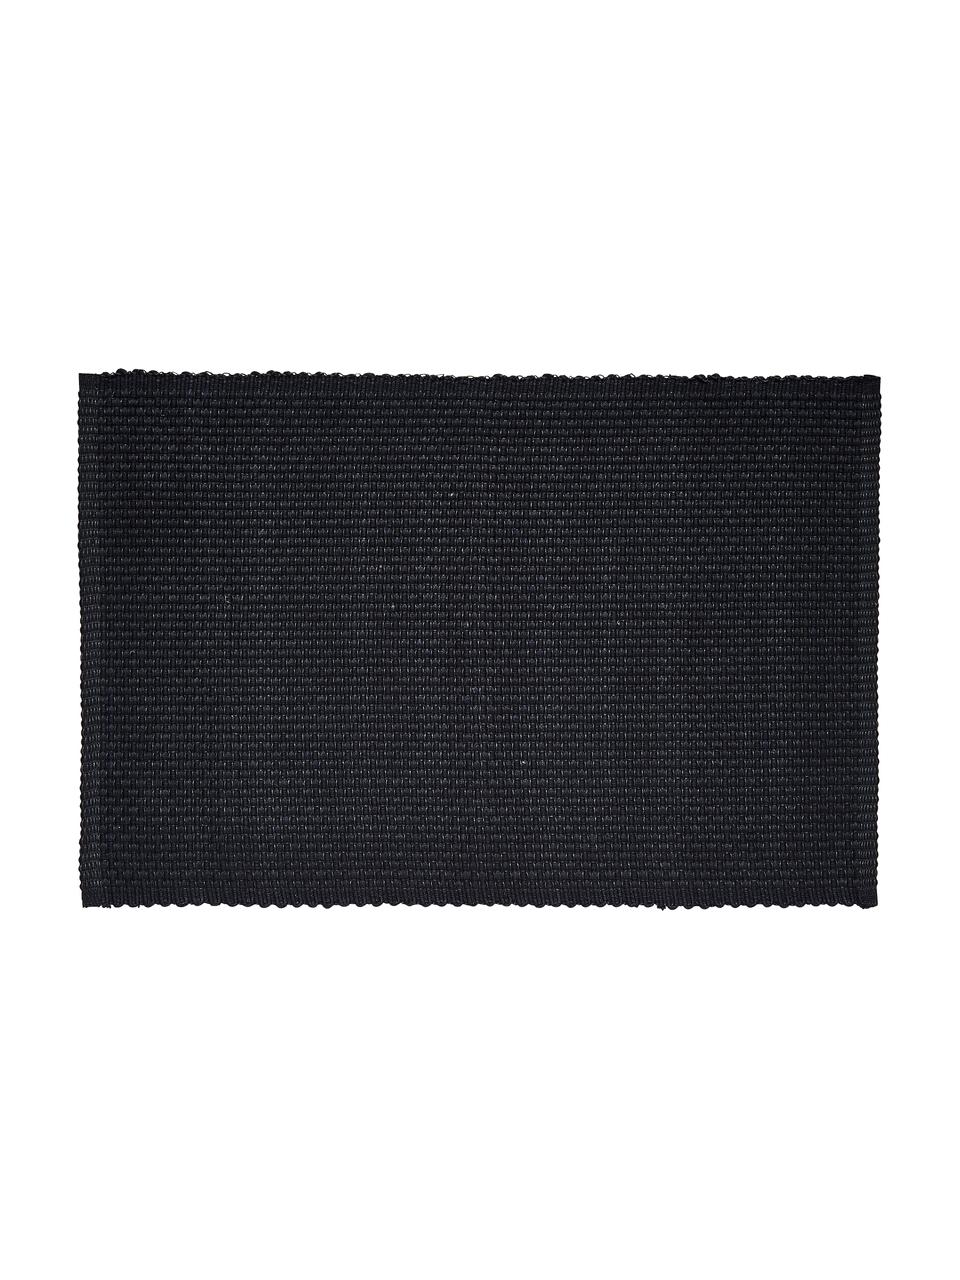 Podkładka z bawełny Grain, 4 szt., 100% bawełna, Czarny, S 33 x D 49 cm